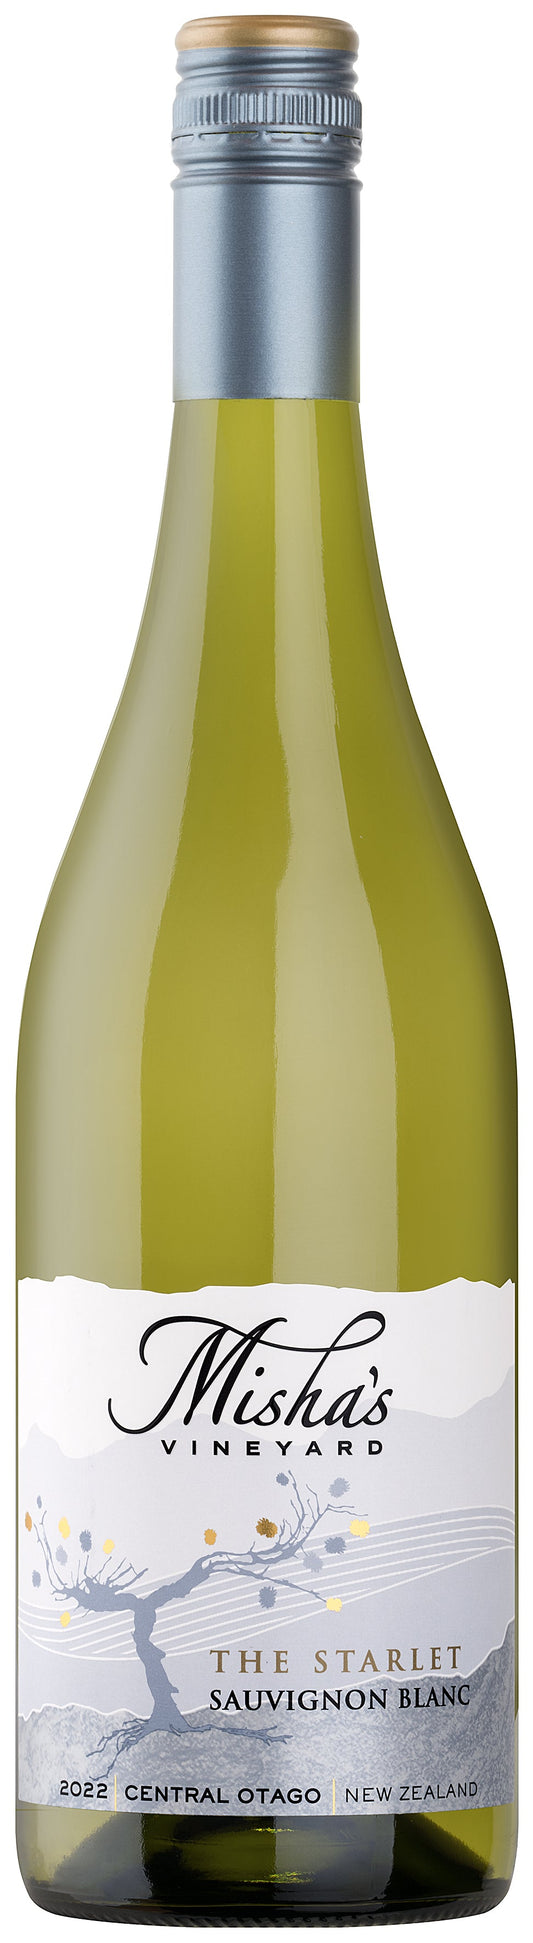 Misha’s Vineyard 'The Starlet' Sauvignon Blanc 2022